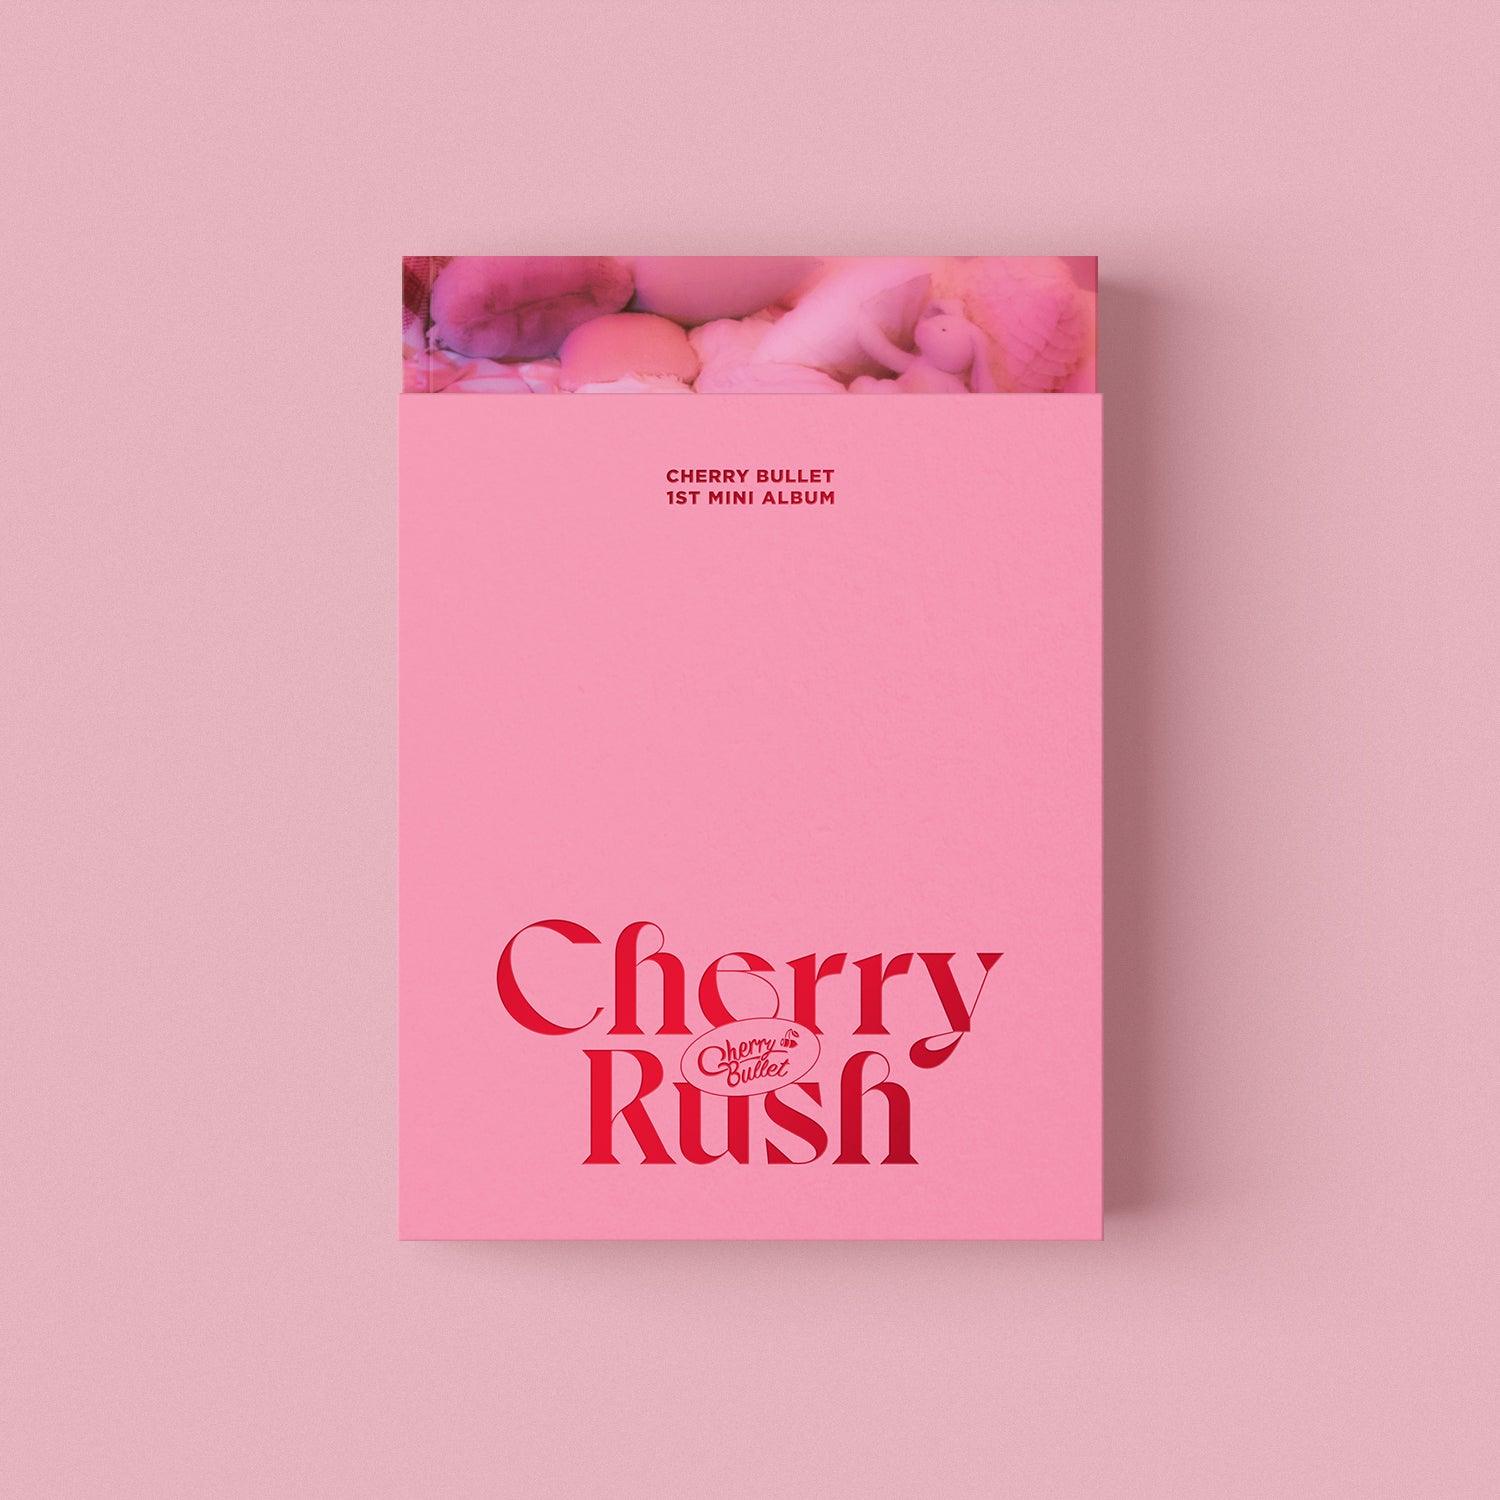 CHERRY BULLET 1ST MINI ALBUM 'CHERRY RUSH'